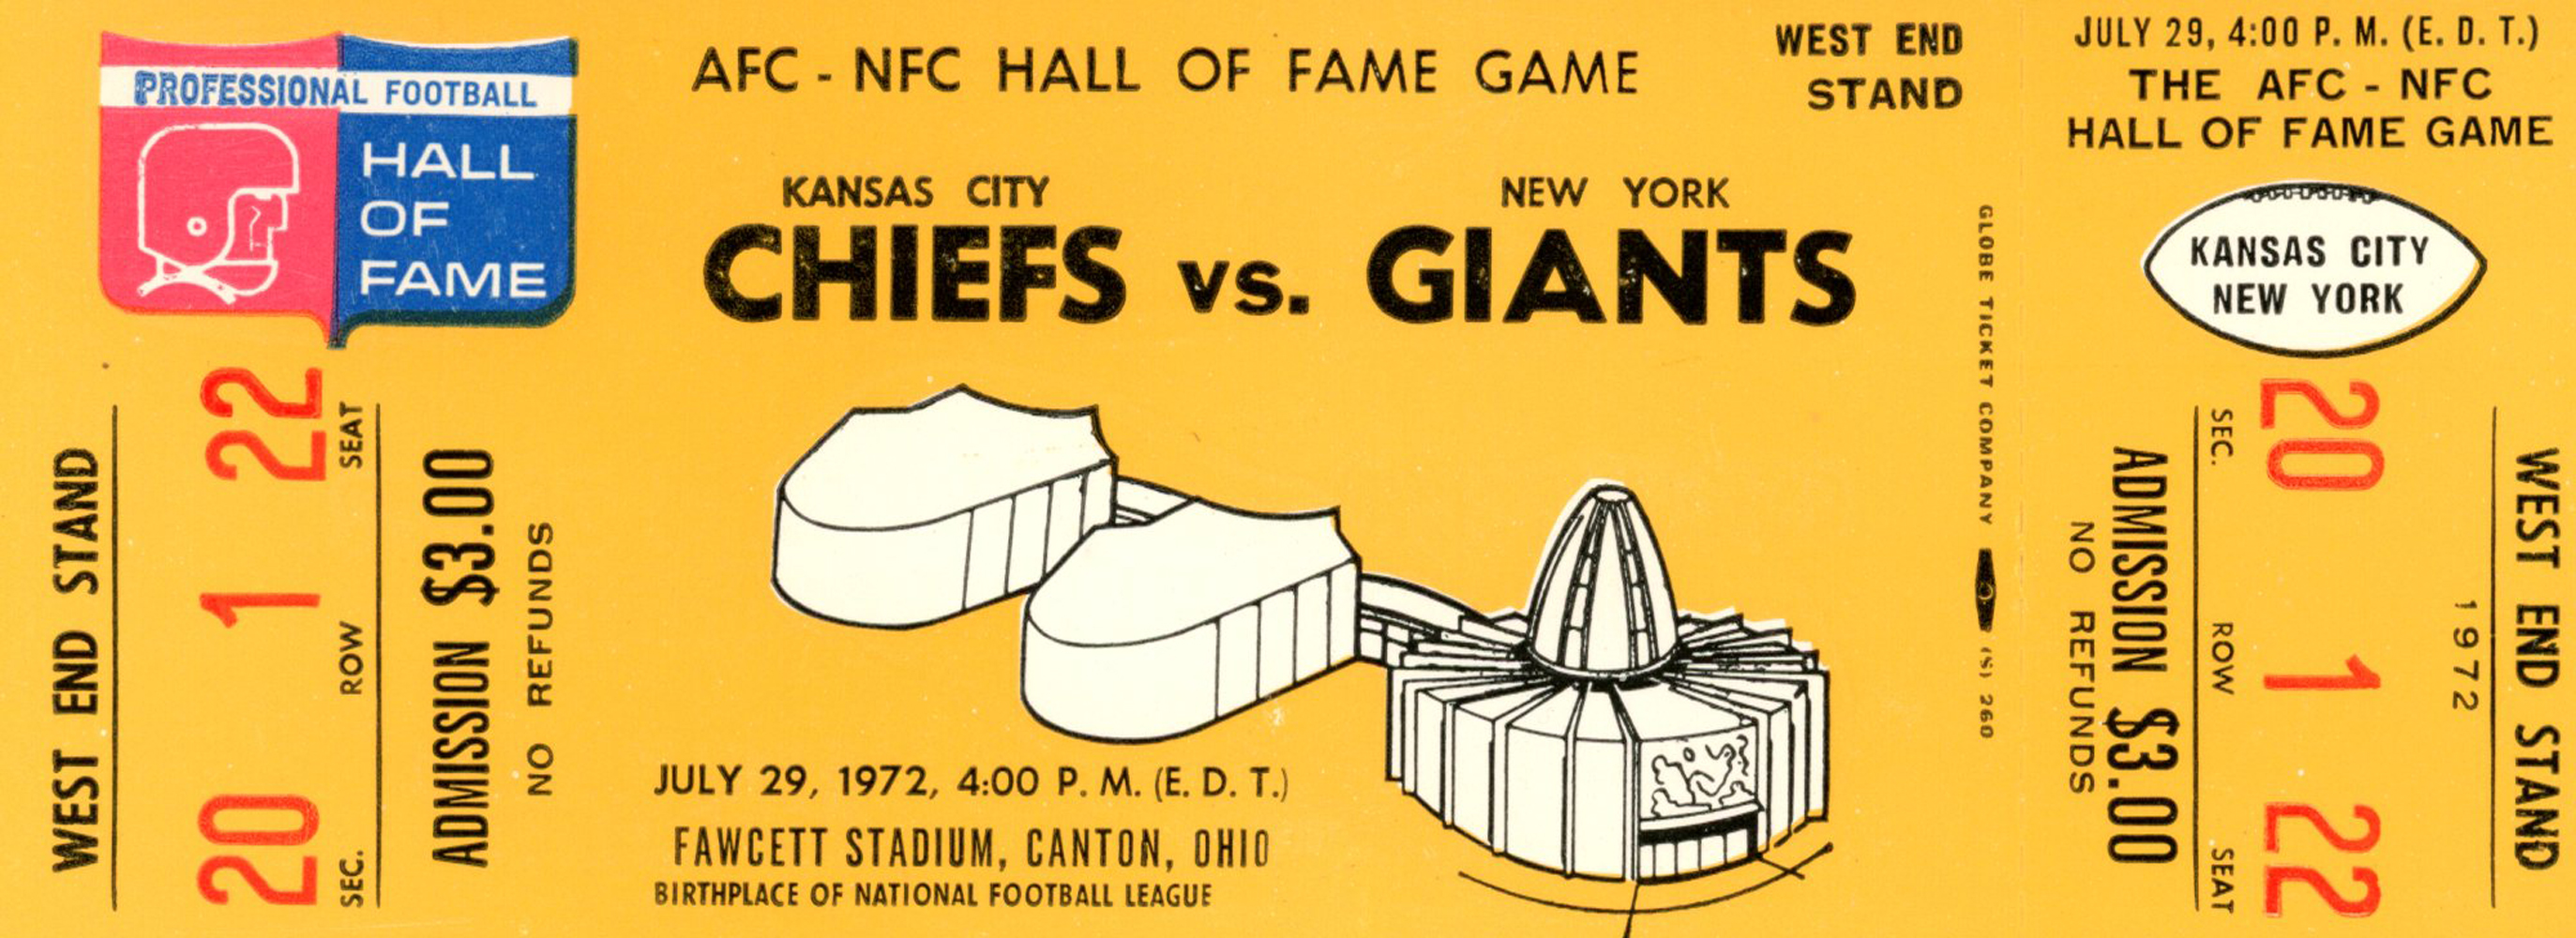 1972 Hall Of Fame Game Ticket Kansas City Chiefs vs New York Giants